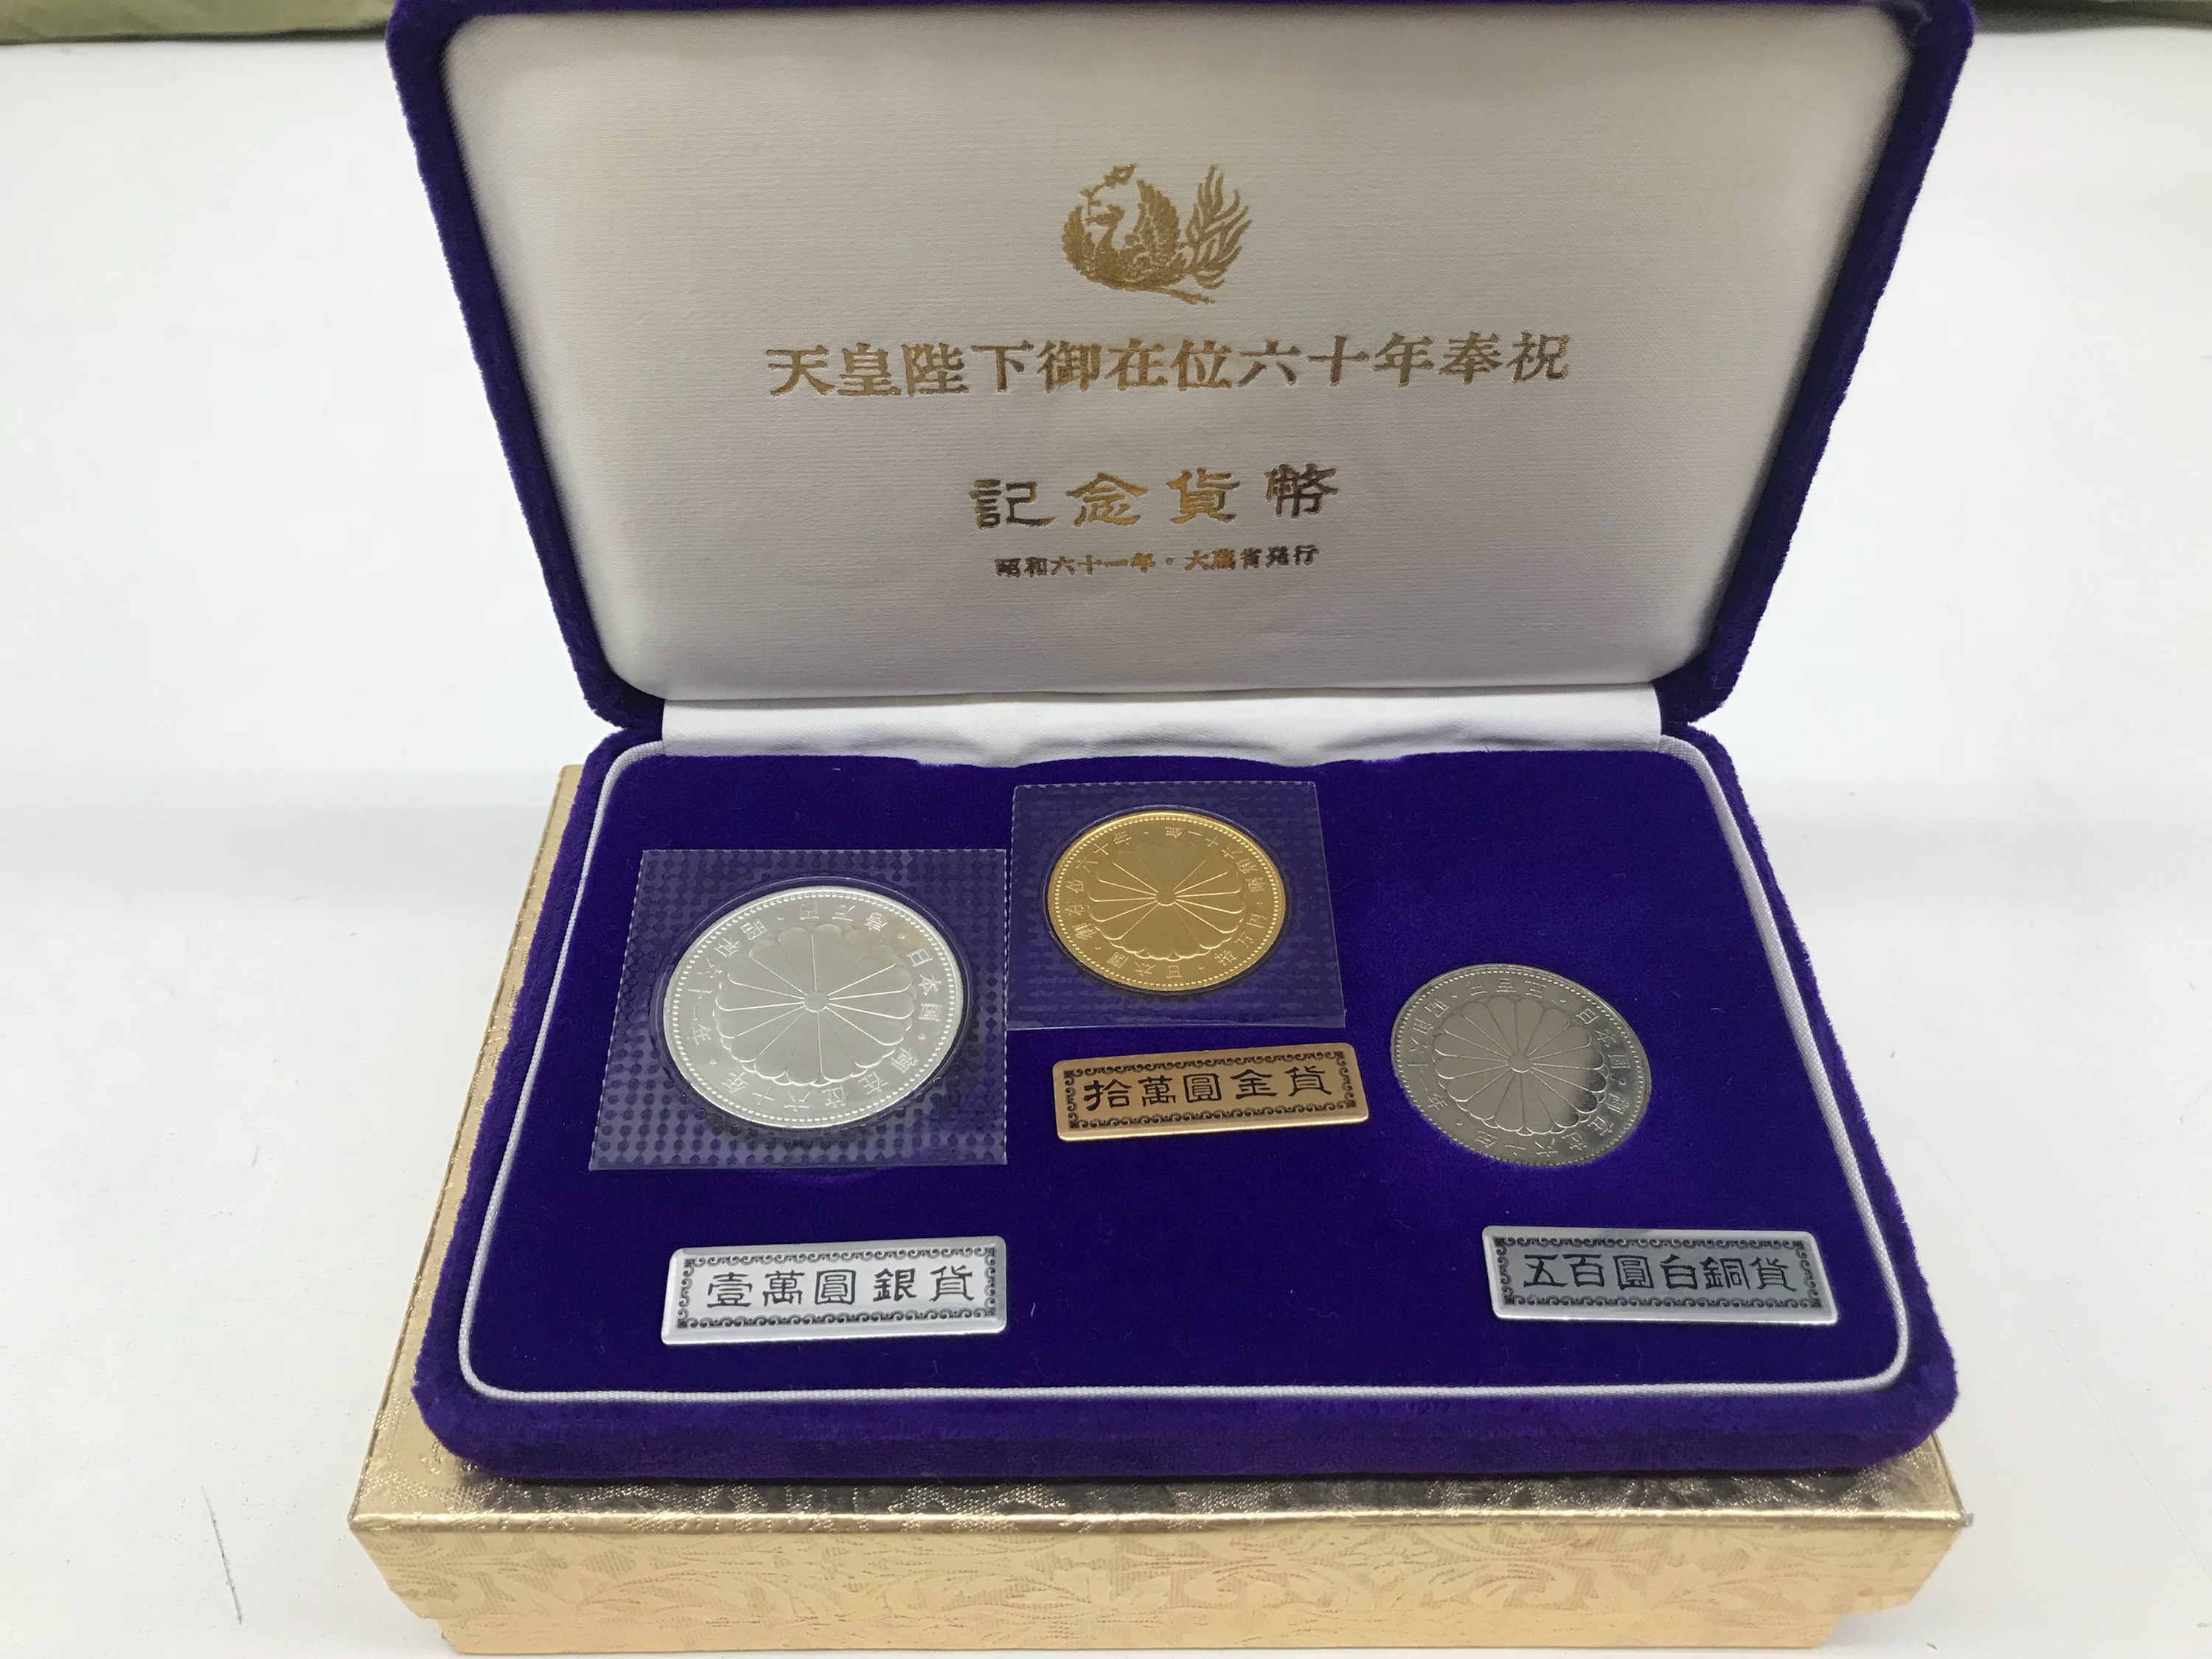 天皇陛下御在位六十年記念 1万円硬貨 2枚セット | www.150.illinois.edu